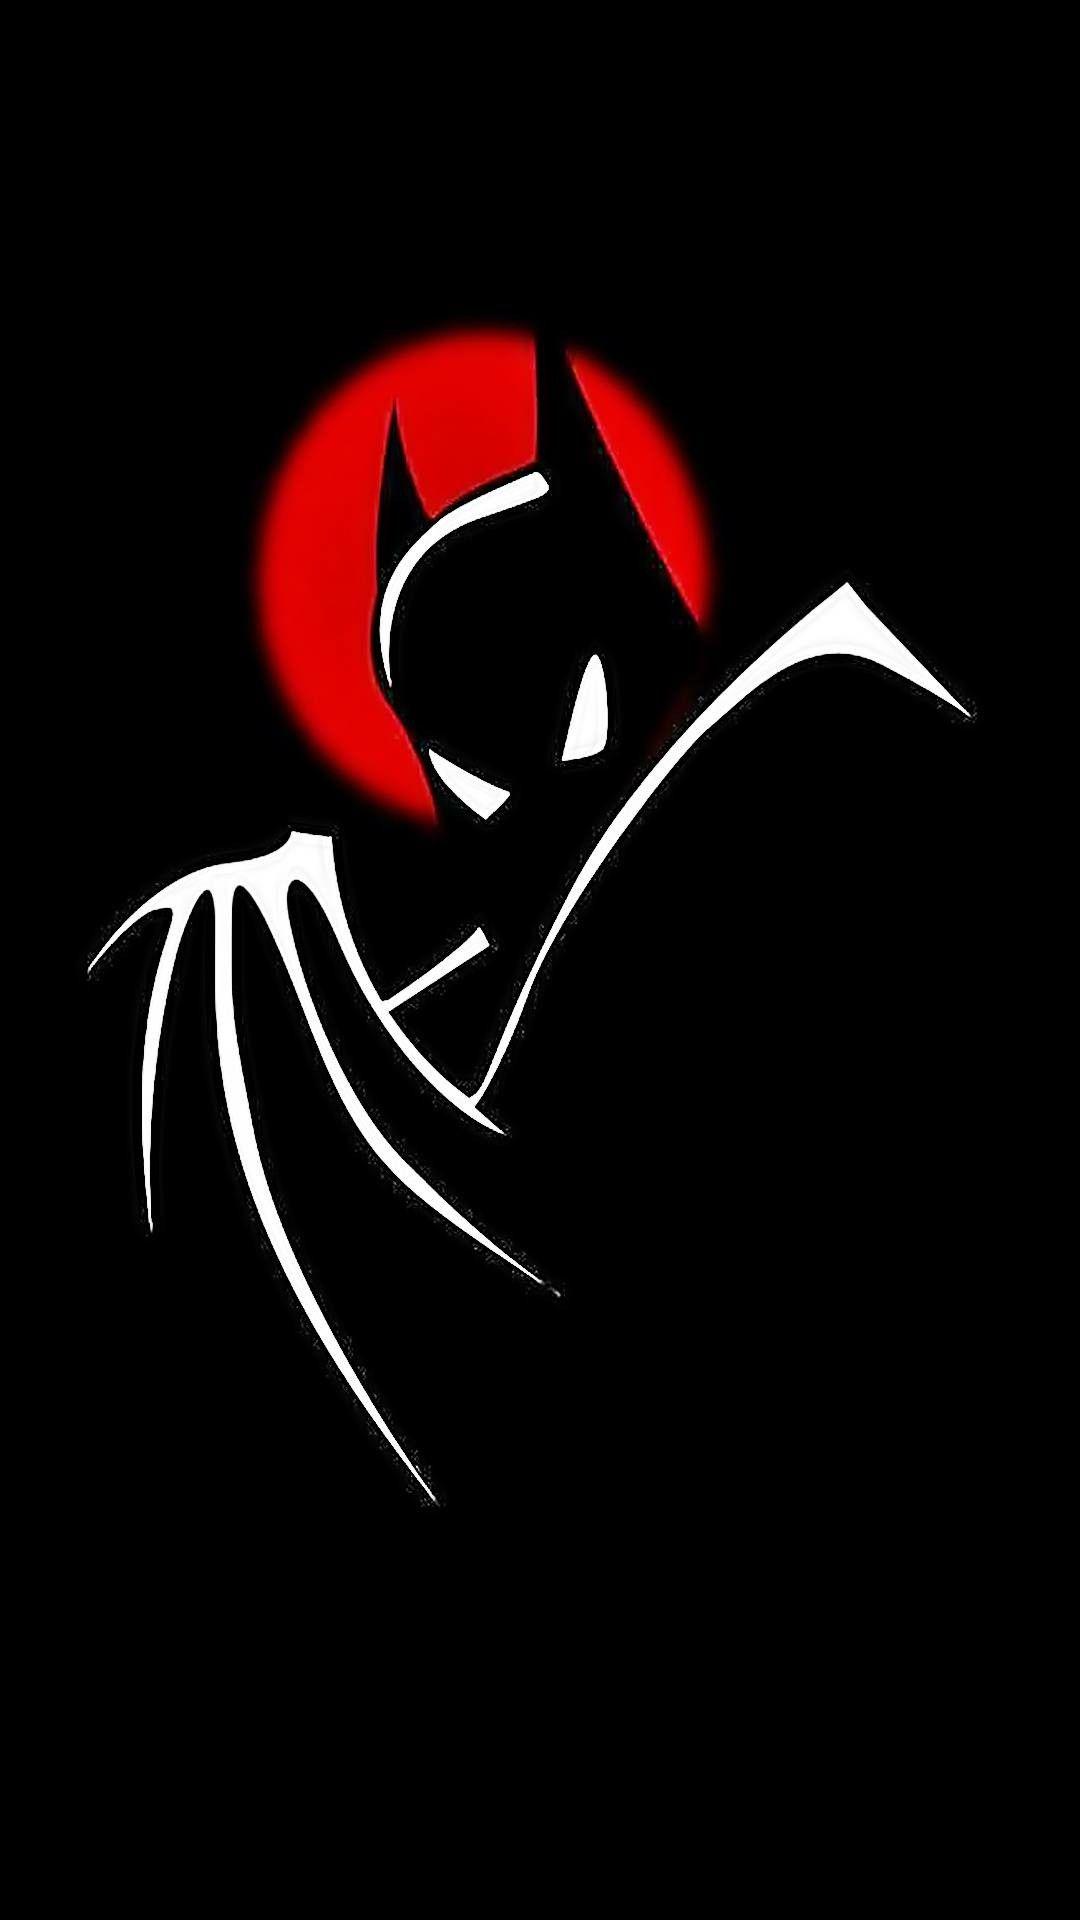 Batman the Animated Series. Batman wallpaper, Batman